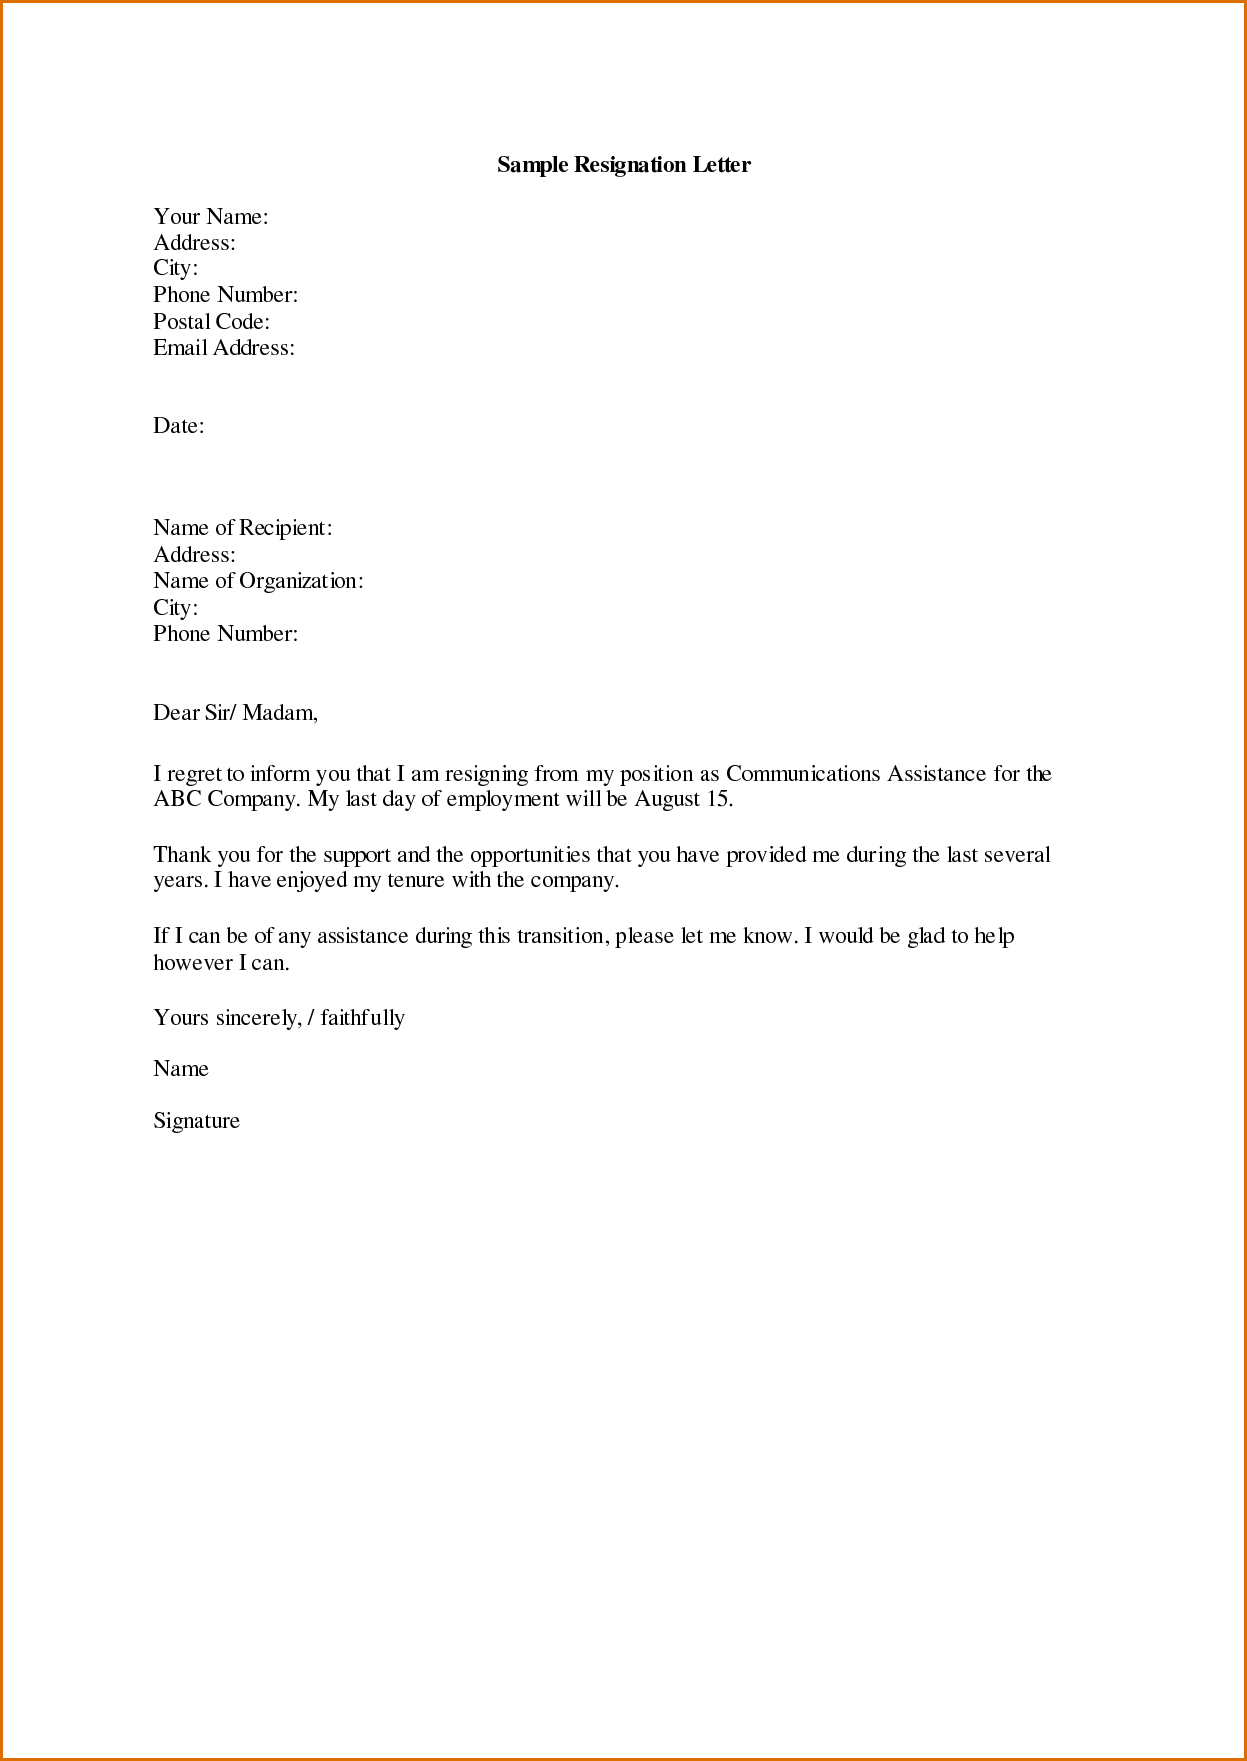 Letter Of Resignation Nursing Template - Sample Displaying 16 Images for Letter Of Resignation Sample toolbar